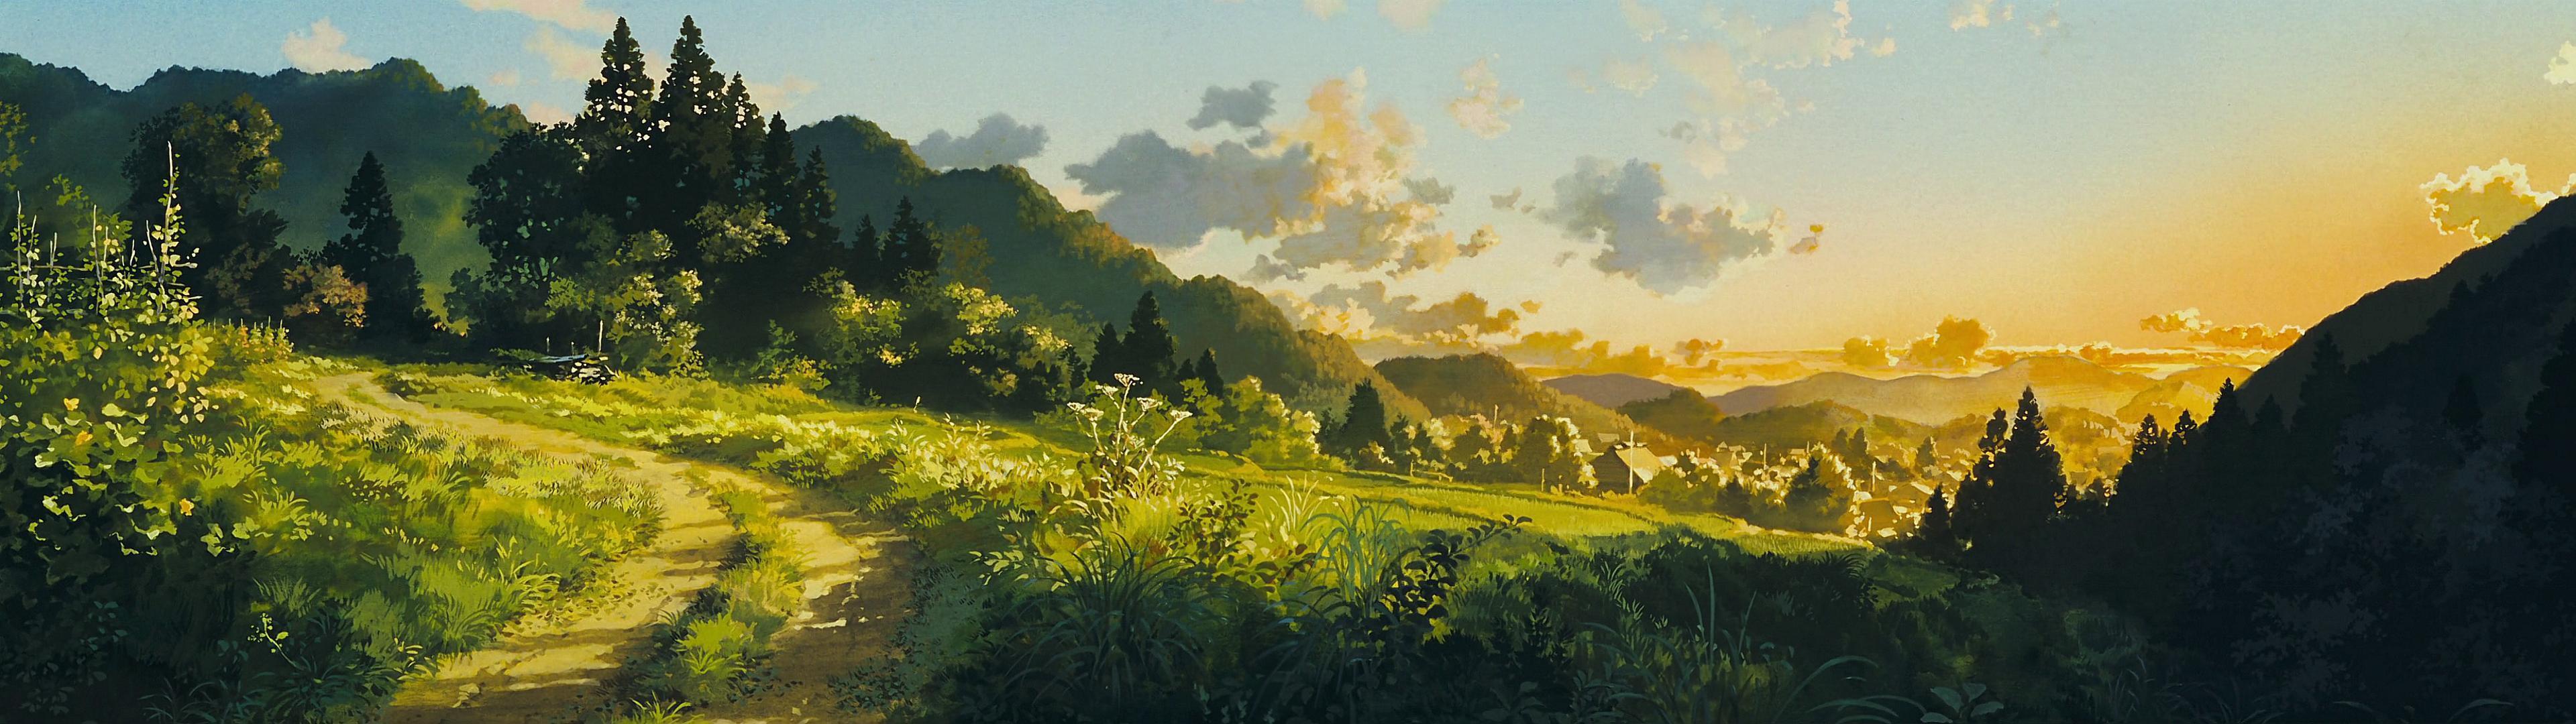 Ghibli double screen wallpaper